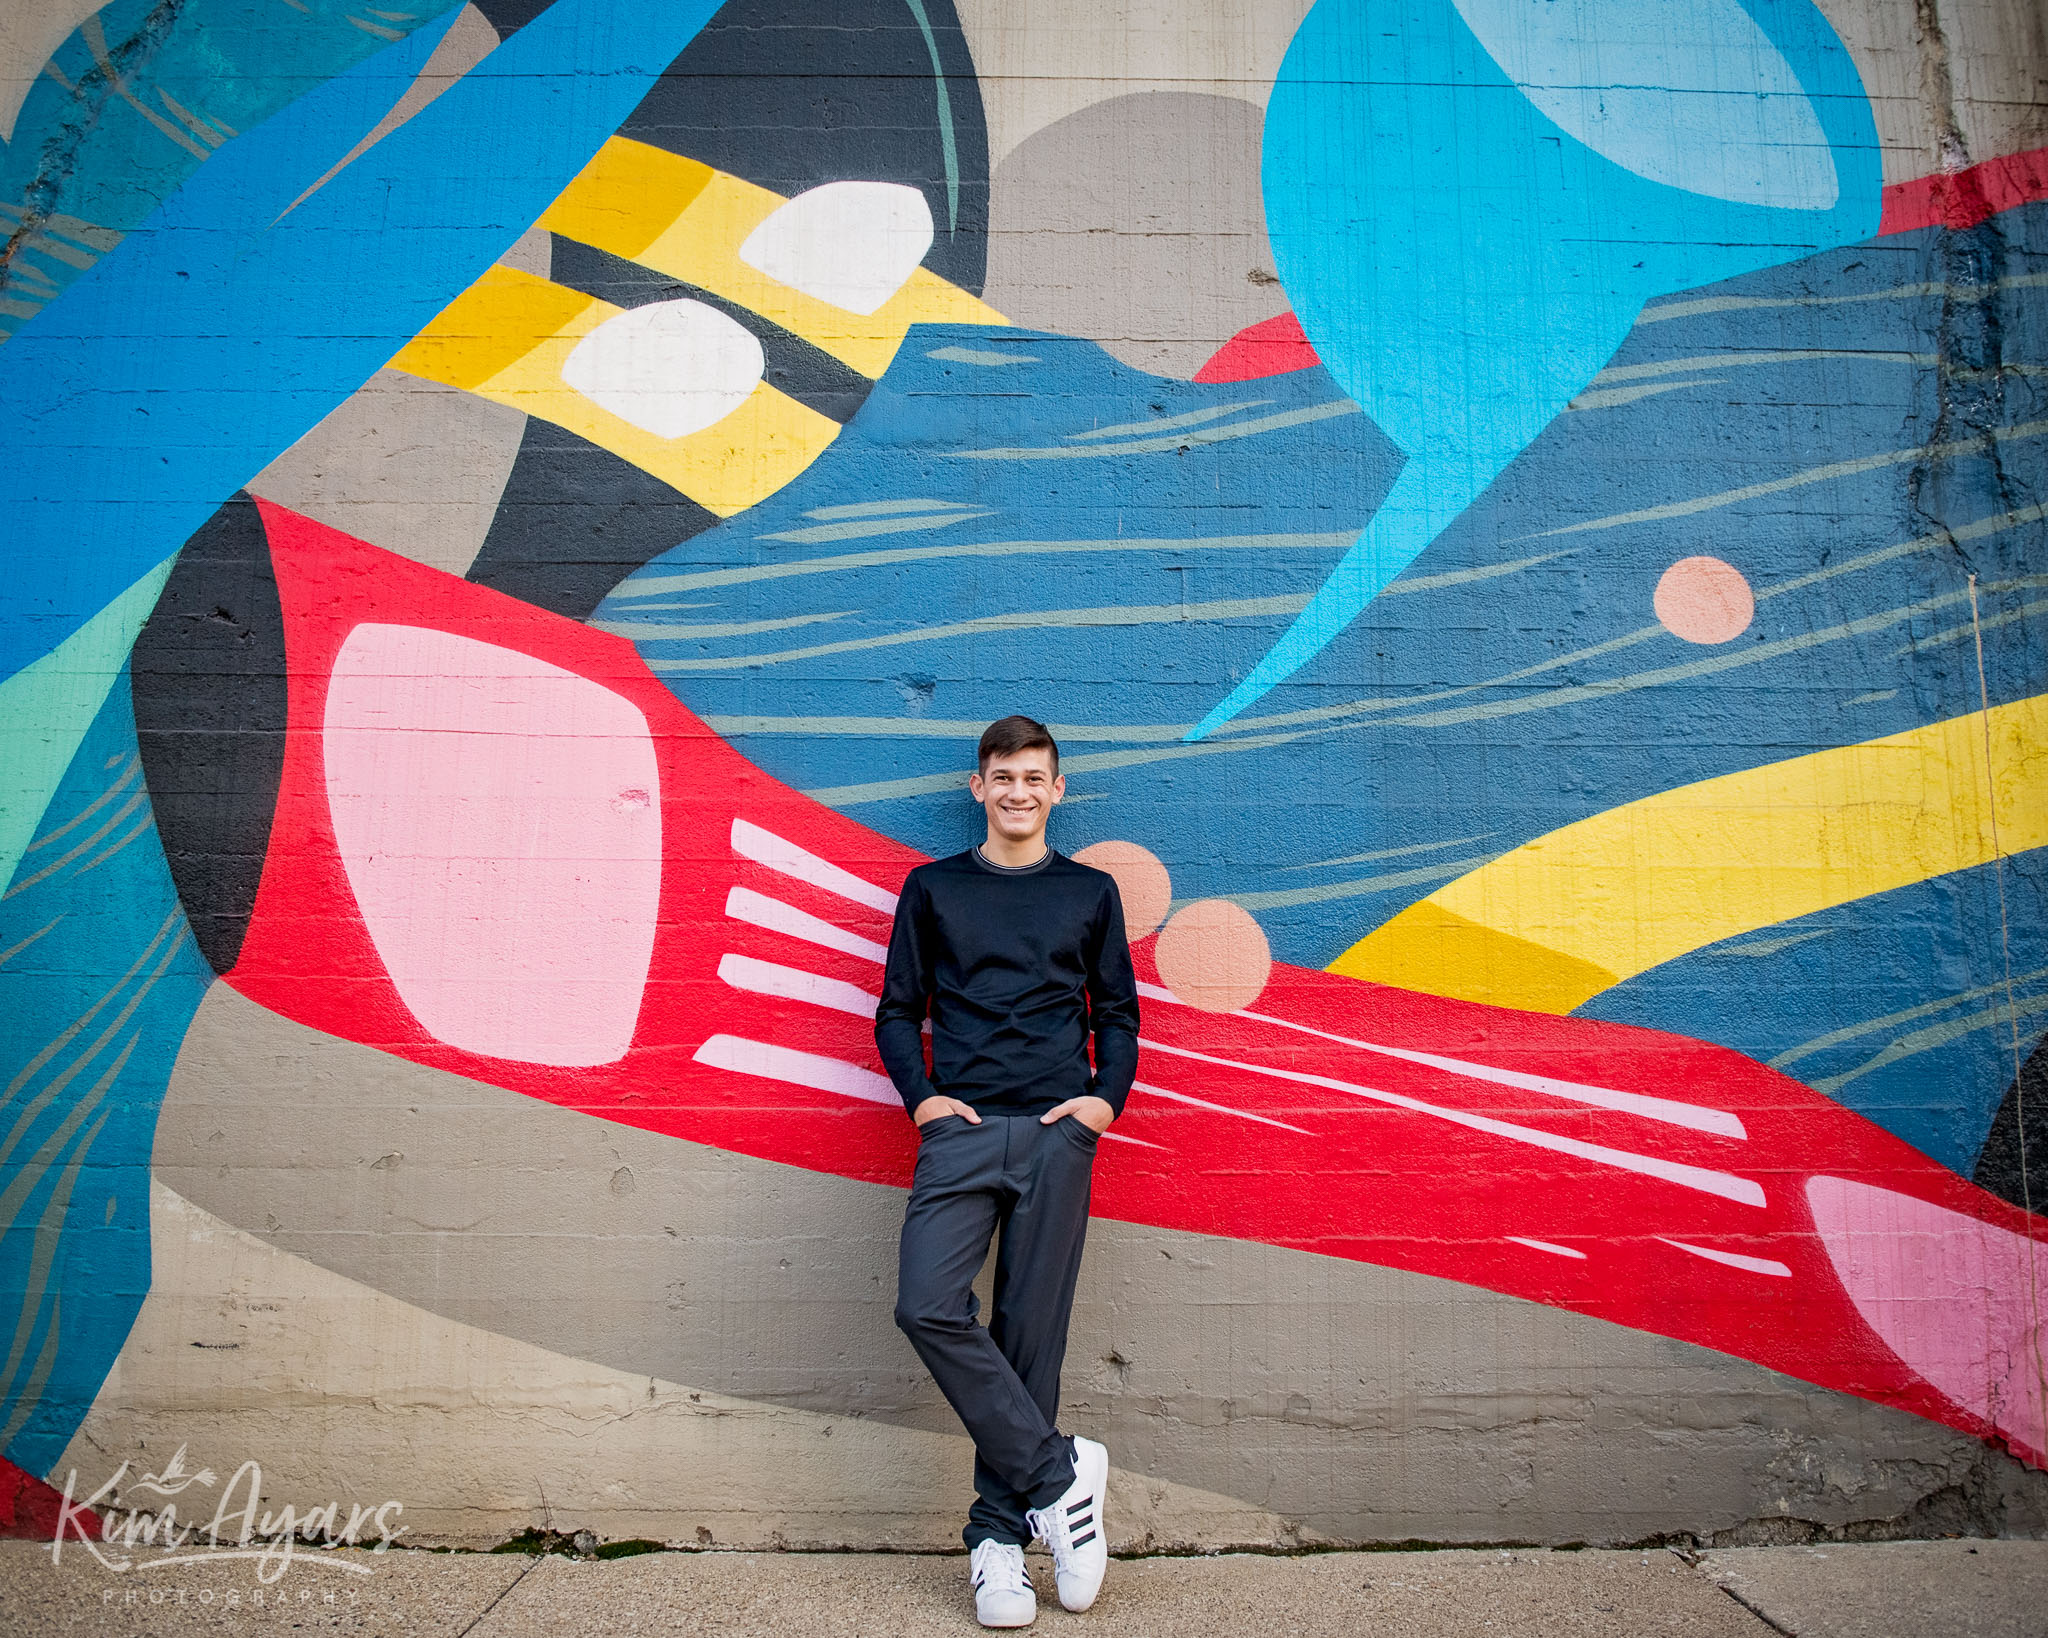 A high school senior stand agains a colorful mural in downtown Aurora.